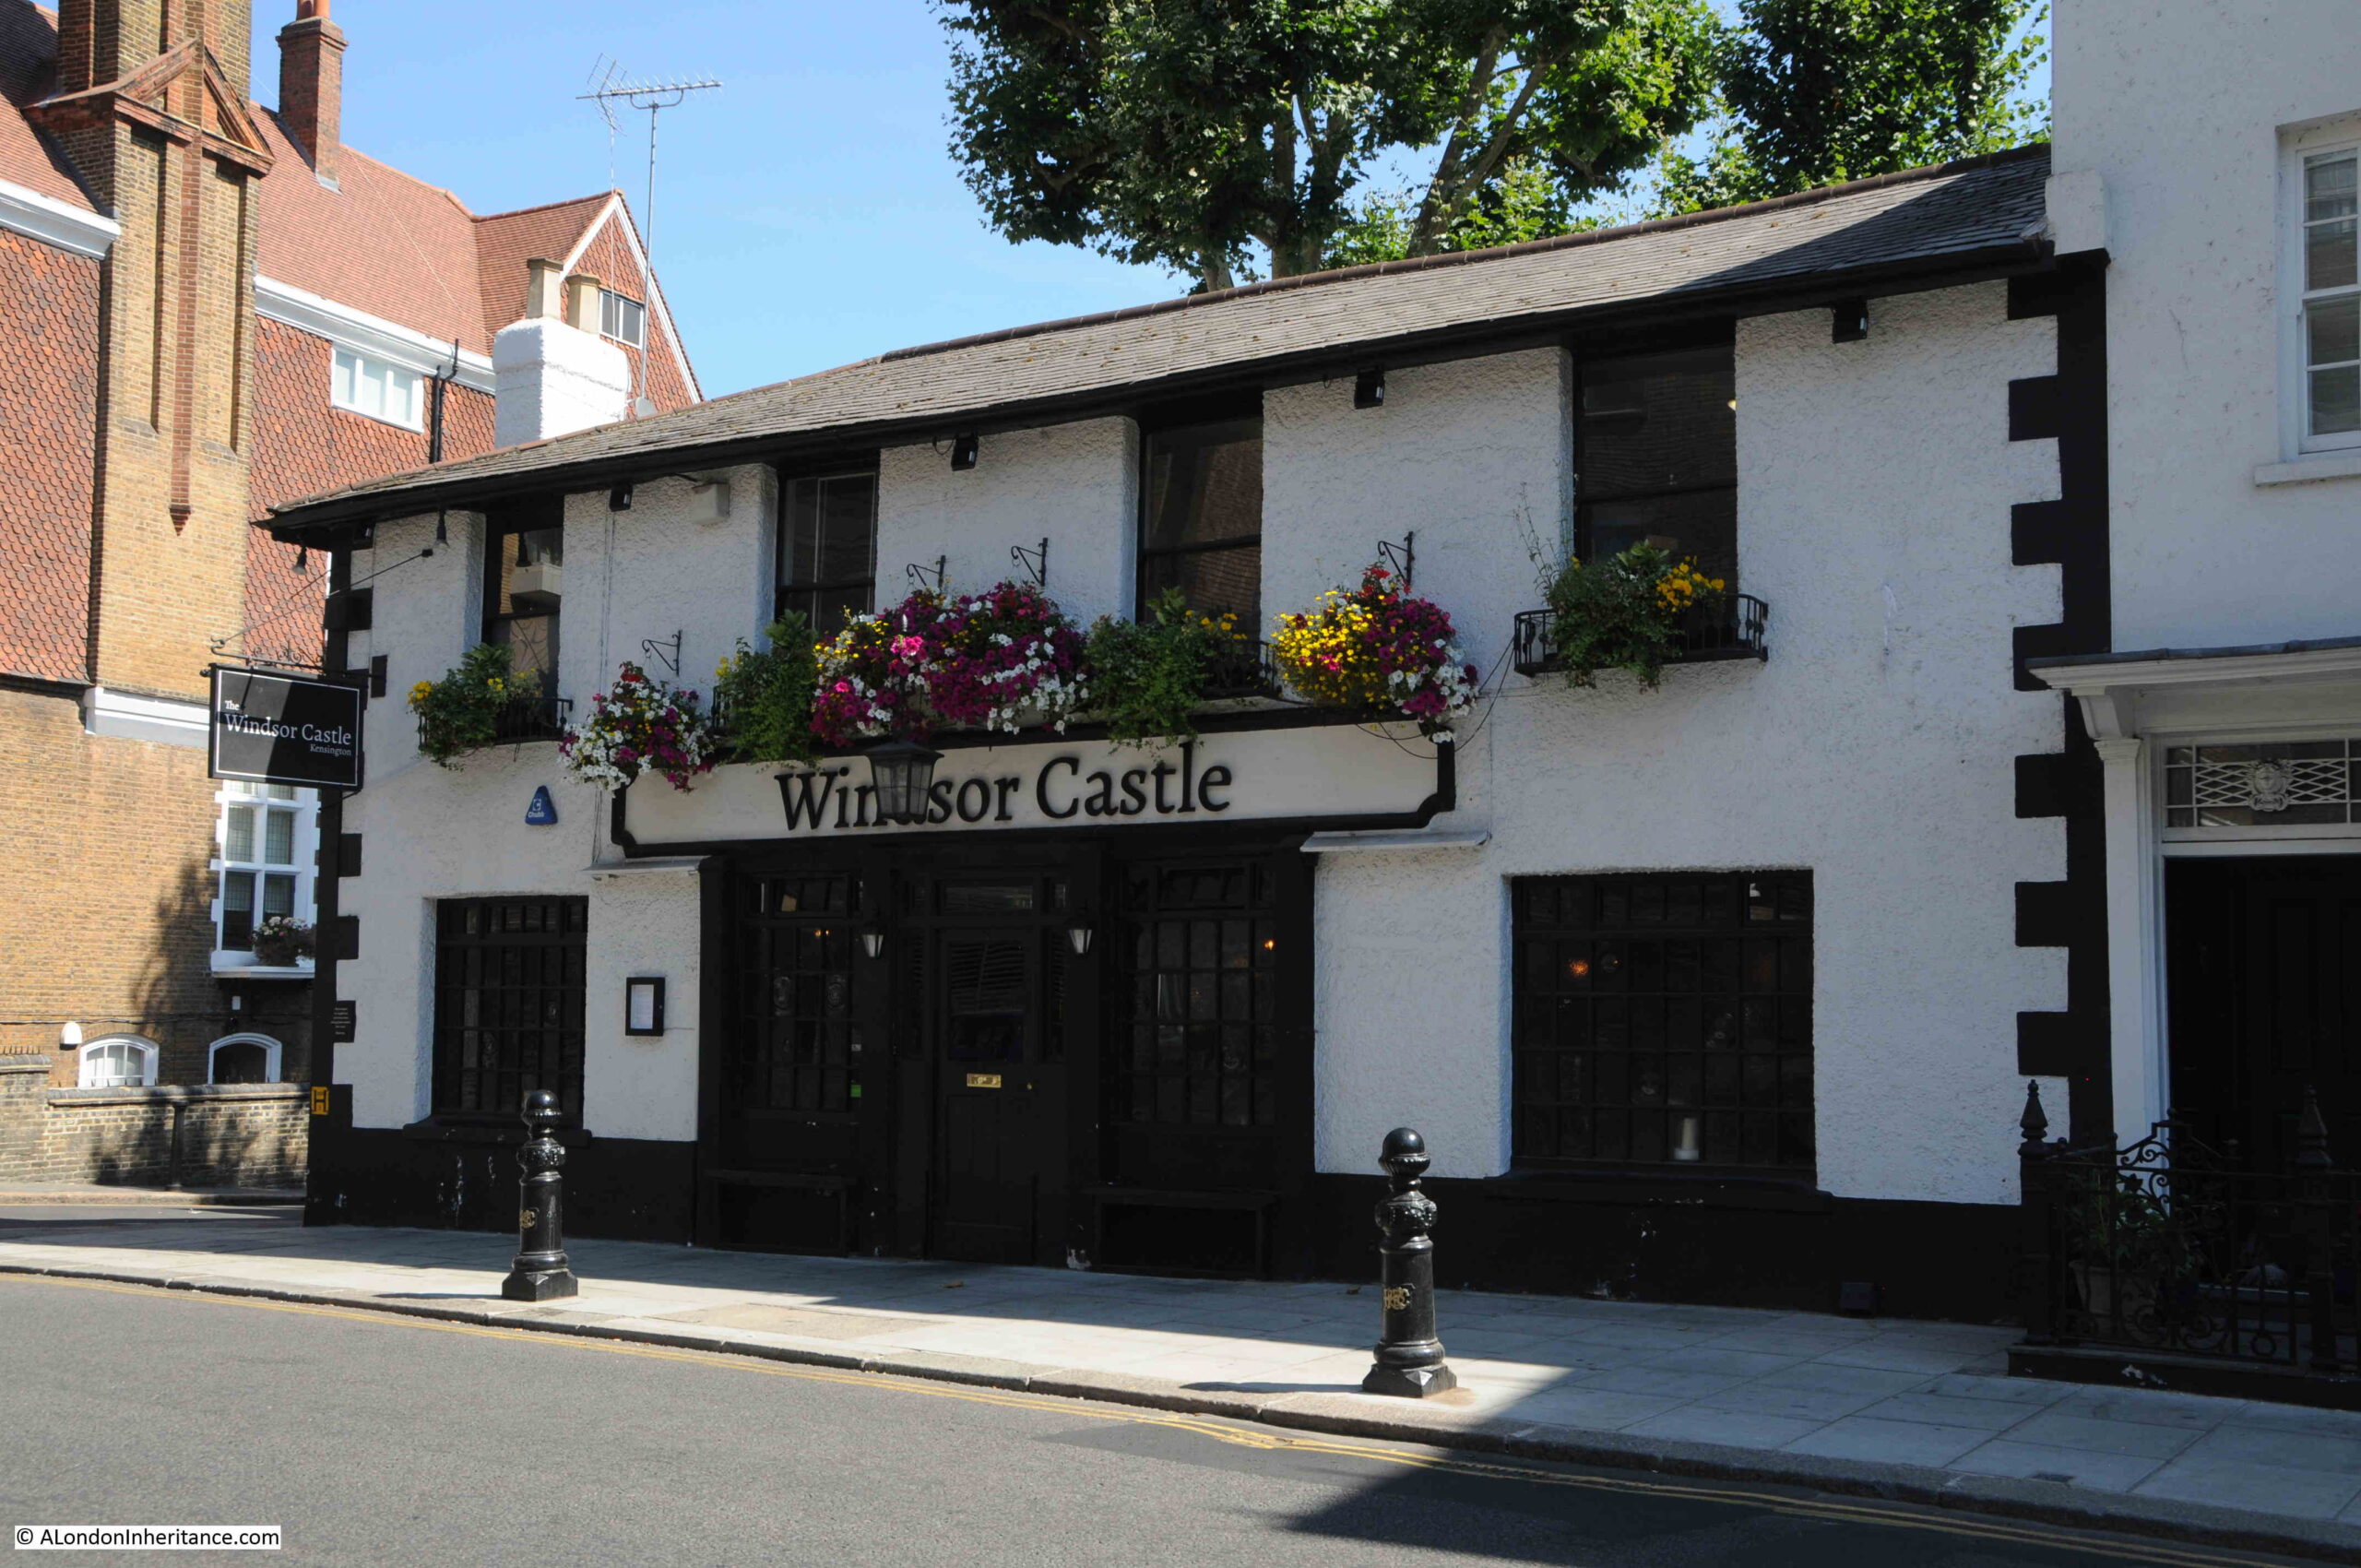 Windsor Castle pub